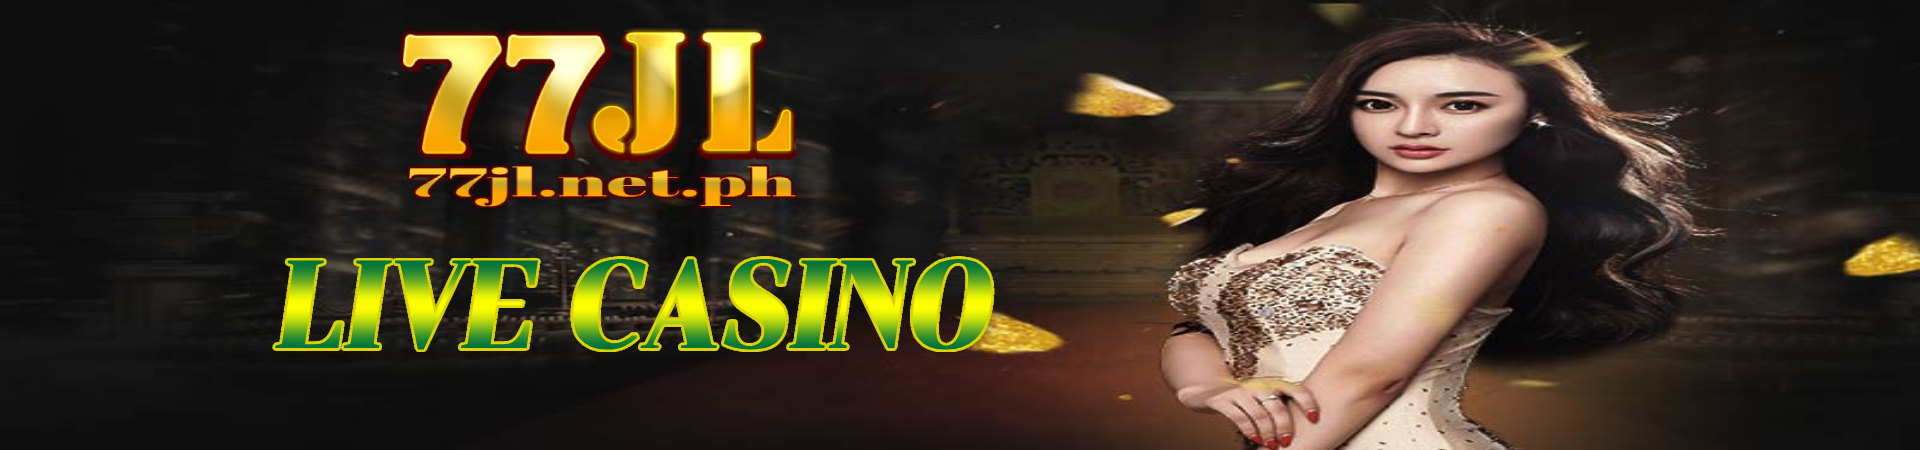 live casino banner